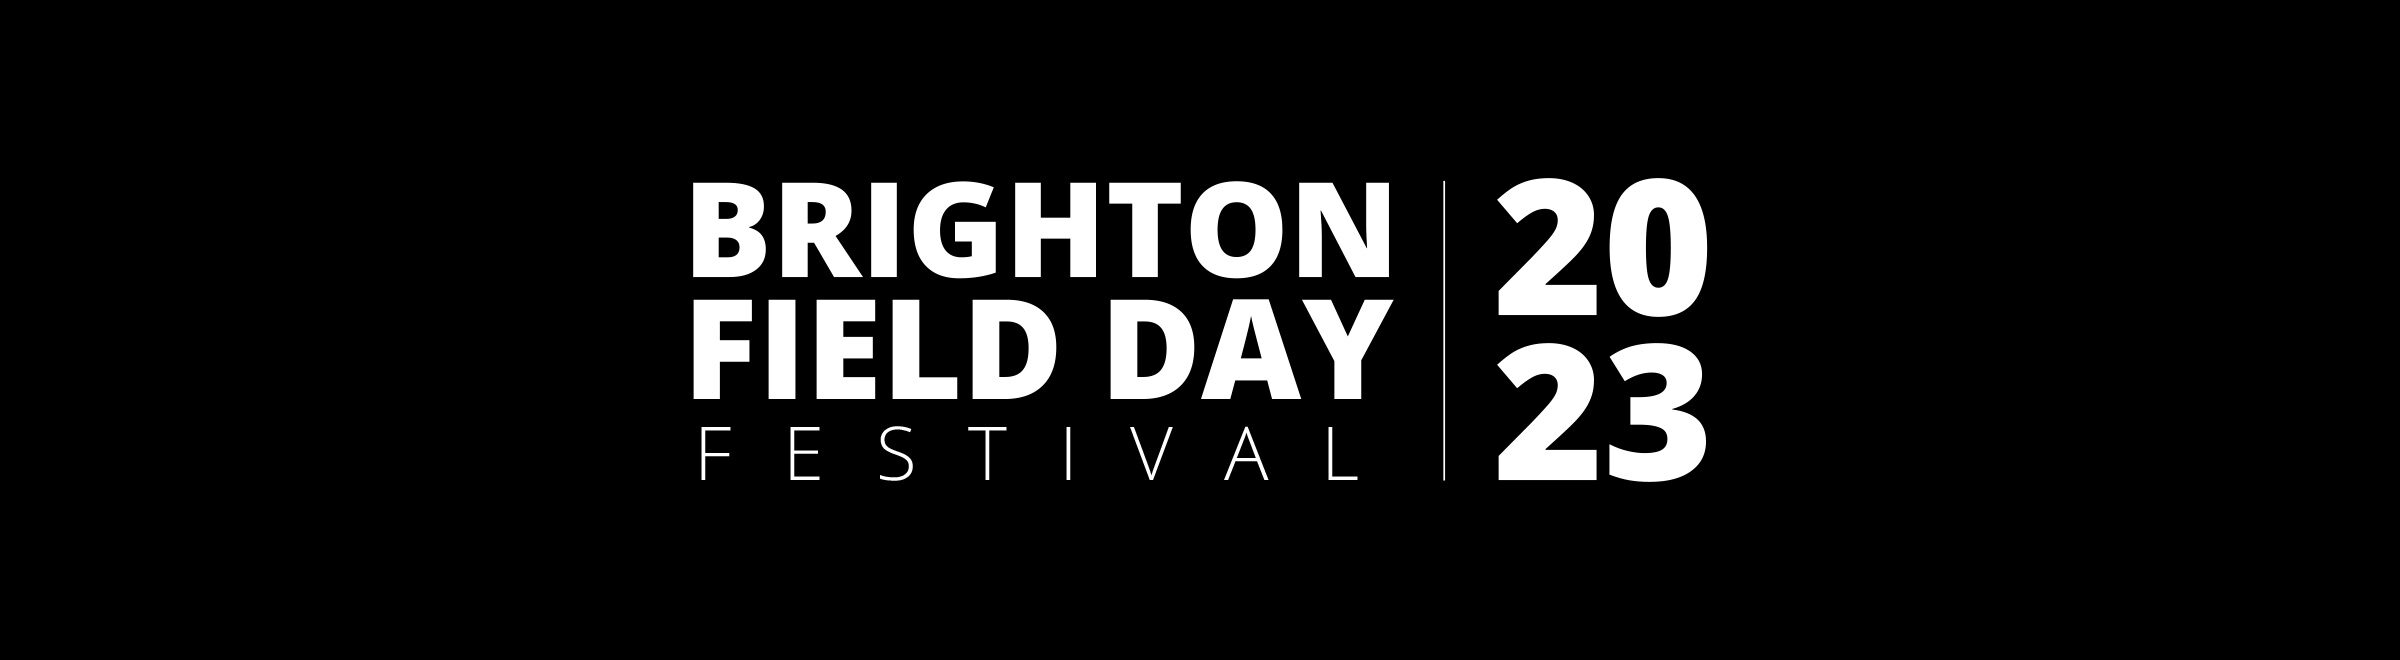 Brighton Field Day 2017